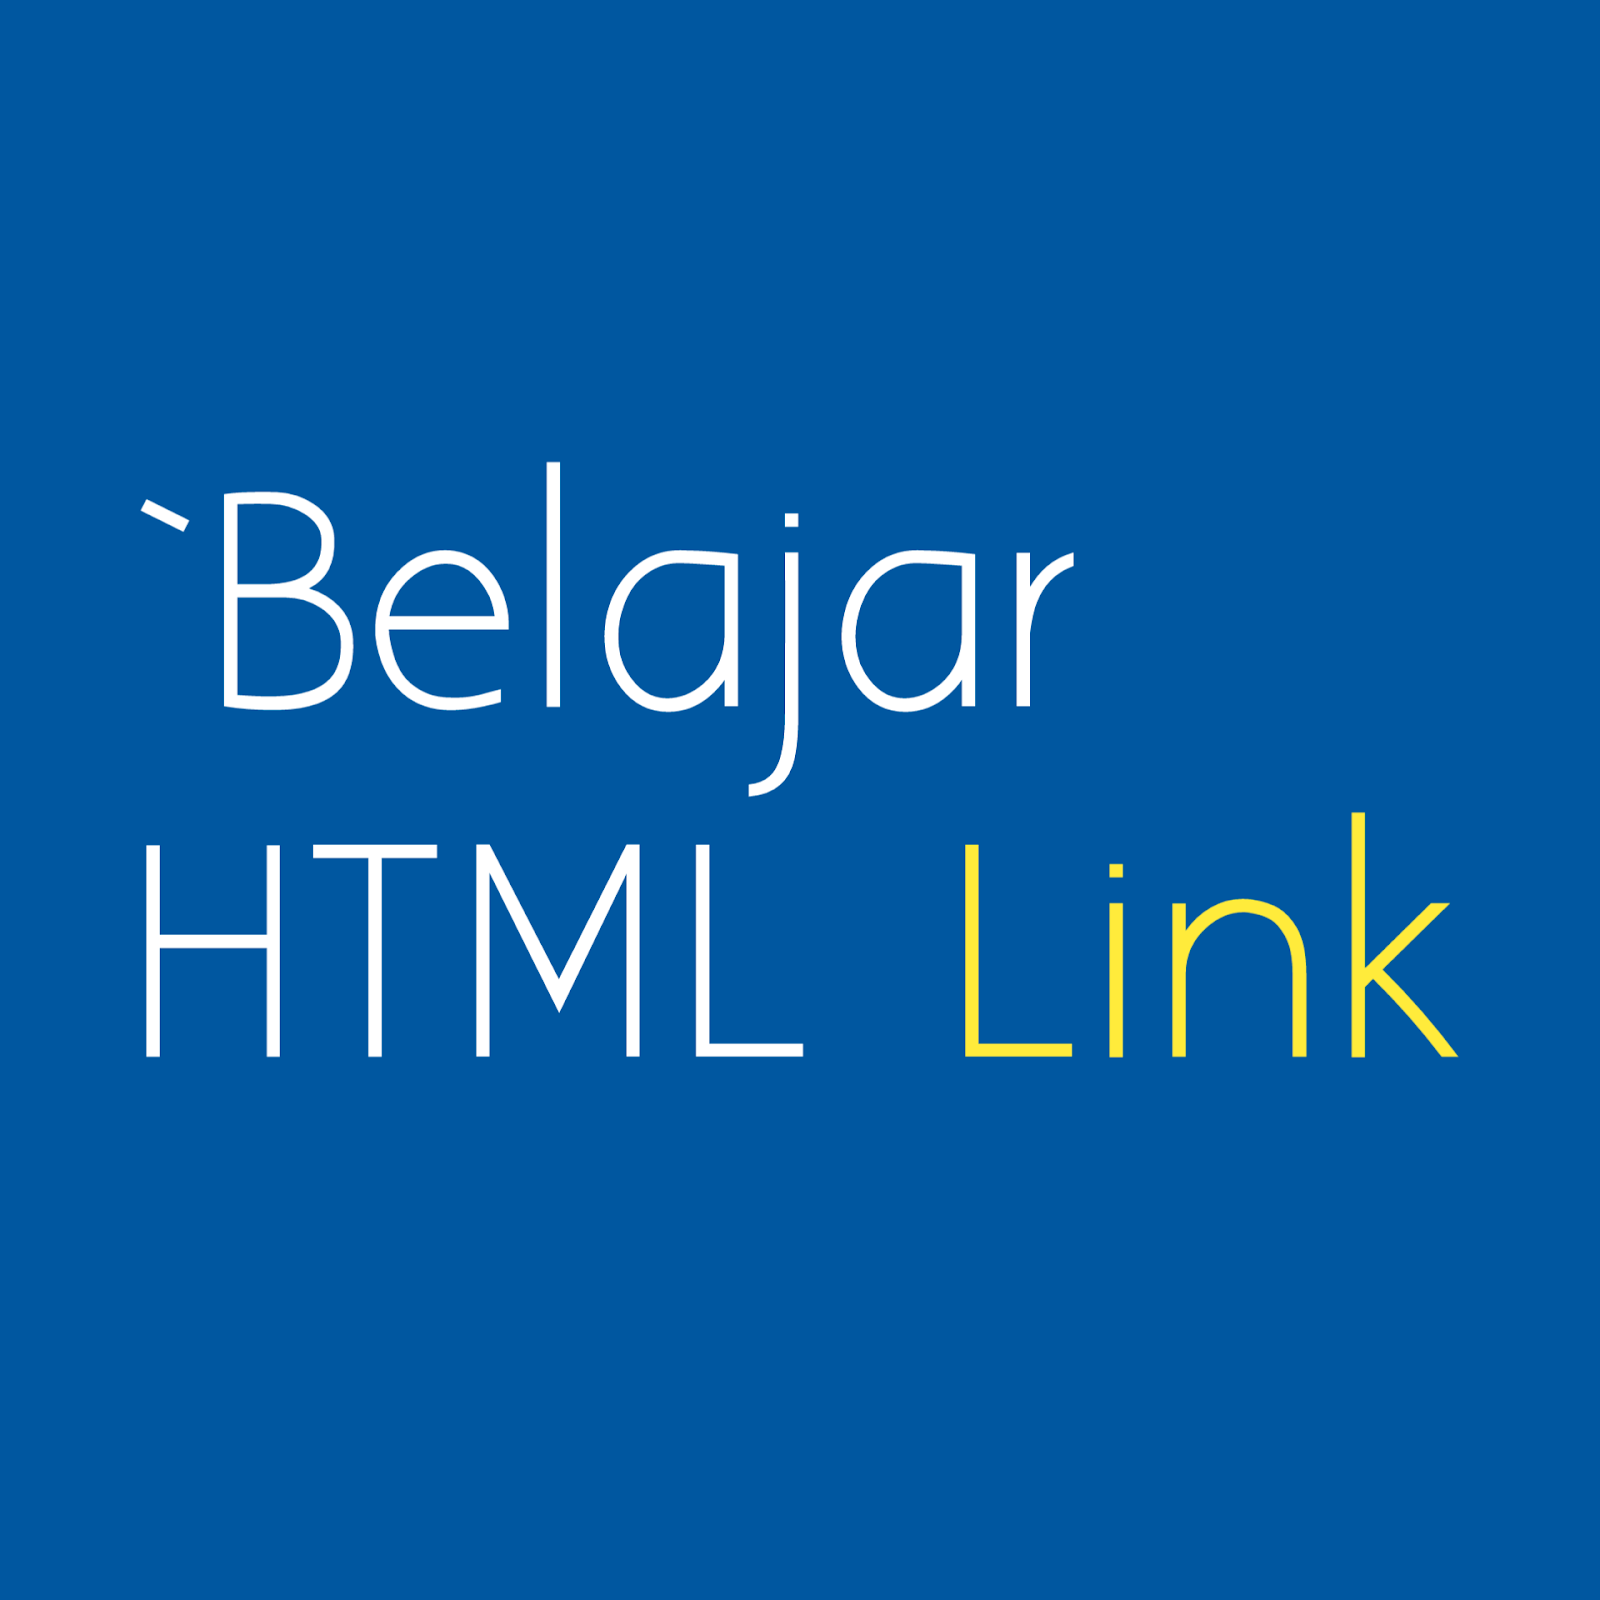 Belajar HTML Link